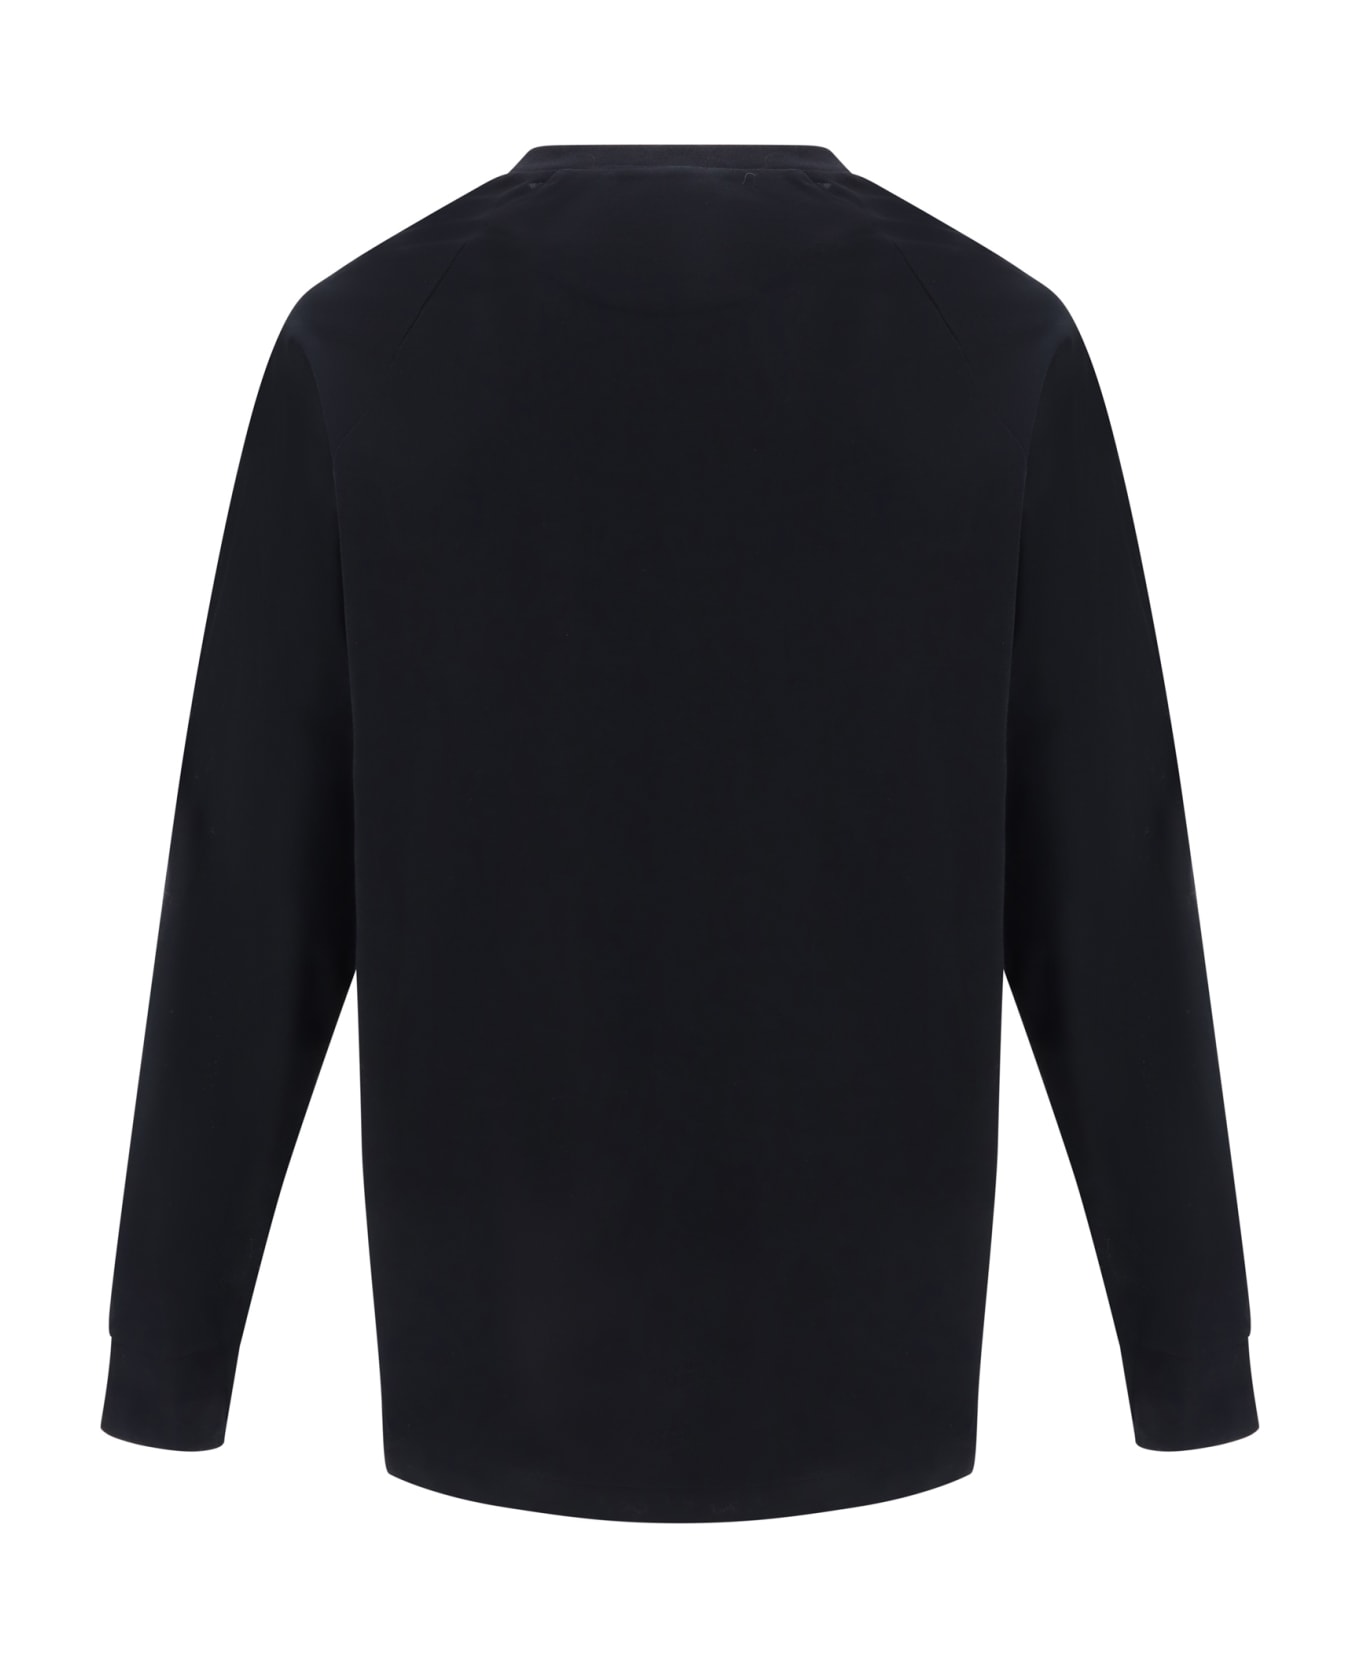 Y-3 Long Sleeve Jersey - Black/owhite ニットウェア